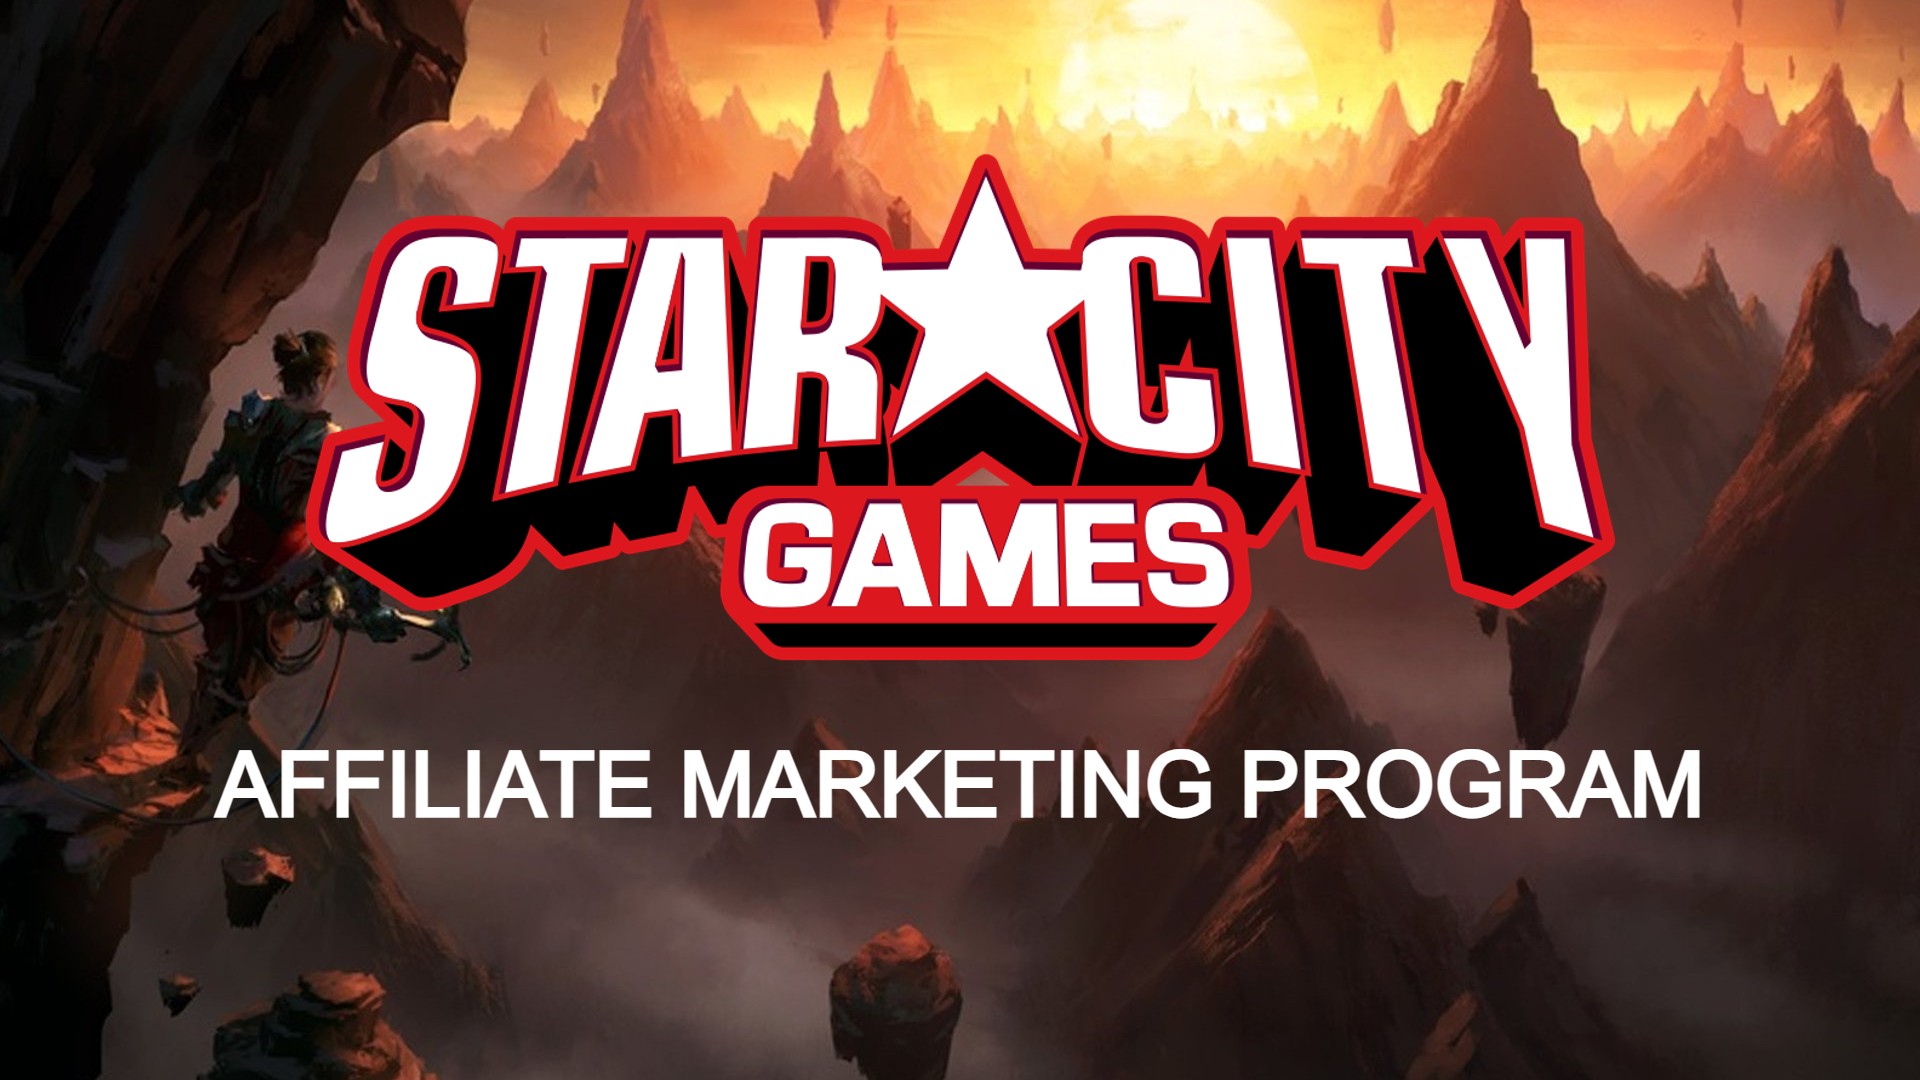 How To Register For Star City Games’ Affiliate Marketing Program